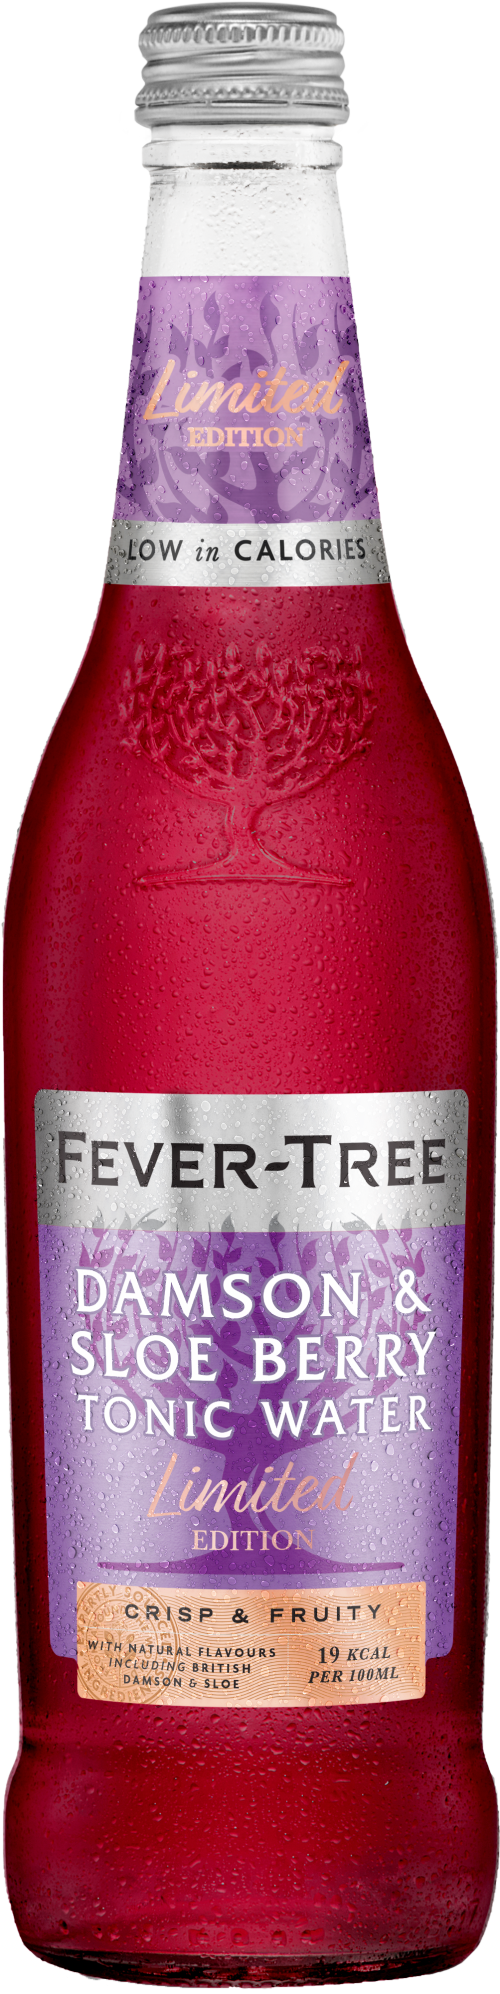 FEVER-TREE Damson & Sloe Tonic Water 500ml